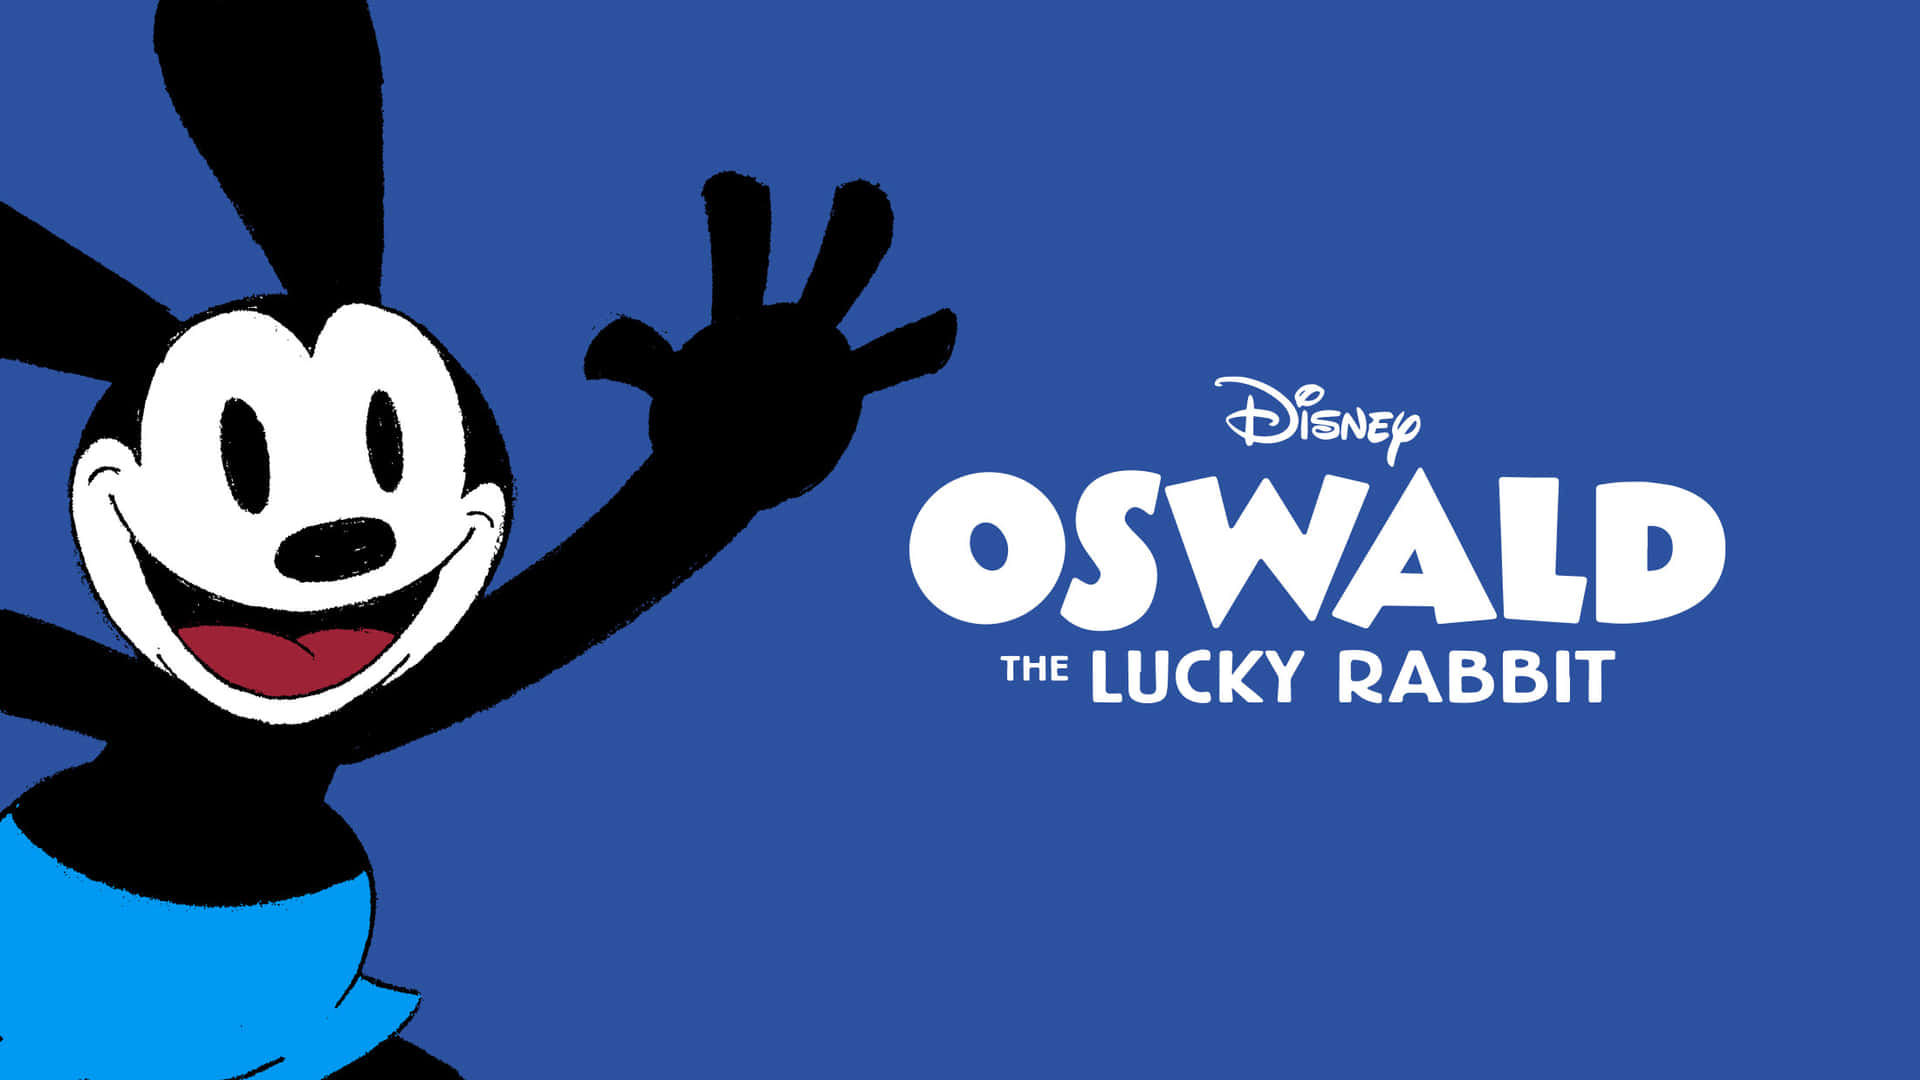 Oswald The Lucky Rabbit Disney Promotional Art Wallpaper